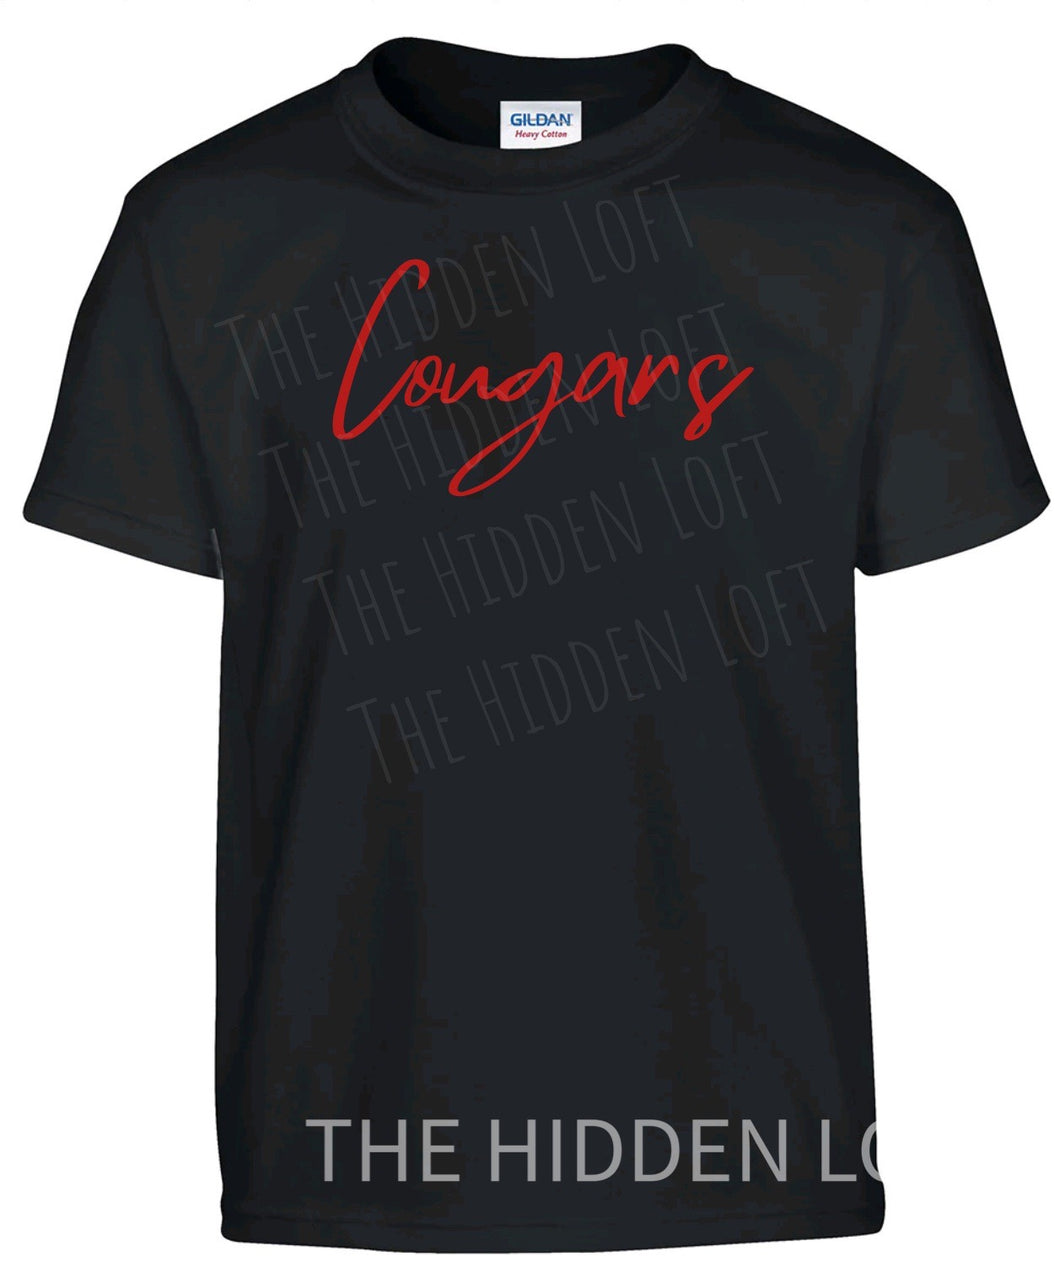 ADULT Cougars T-shirt- BLACK